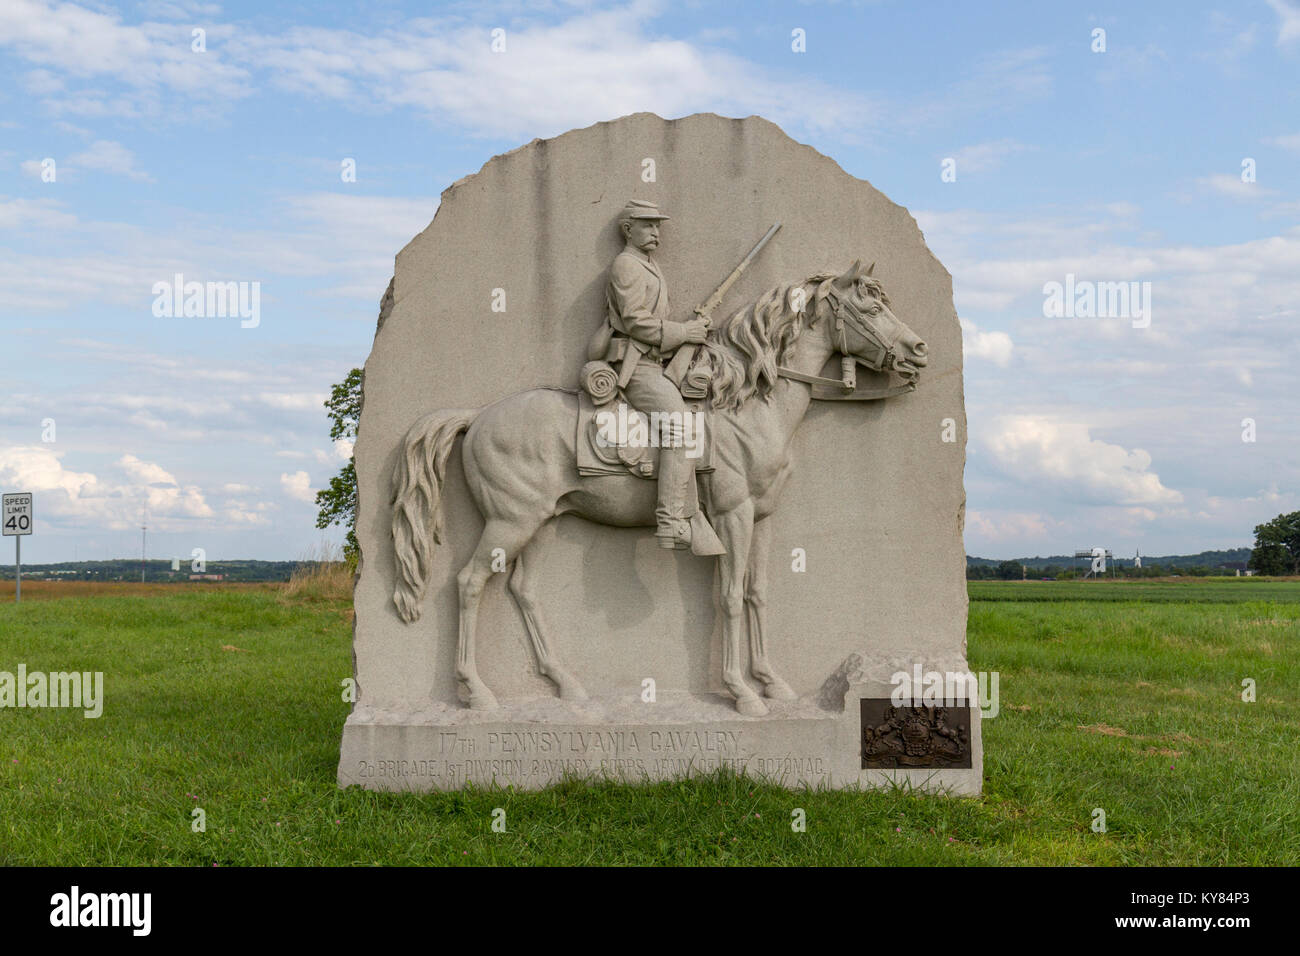 The 17th Pennsylvania Cavalry Memorial, Gettysburg National Military Park, Pennsylvania, United States. Stock Photo